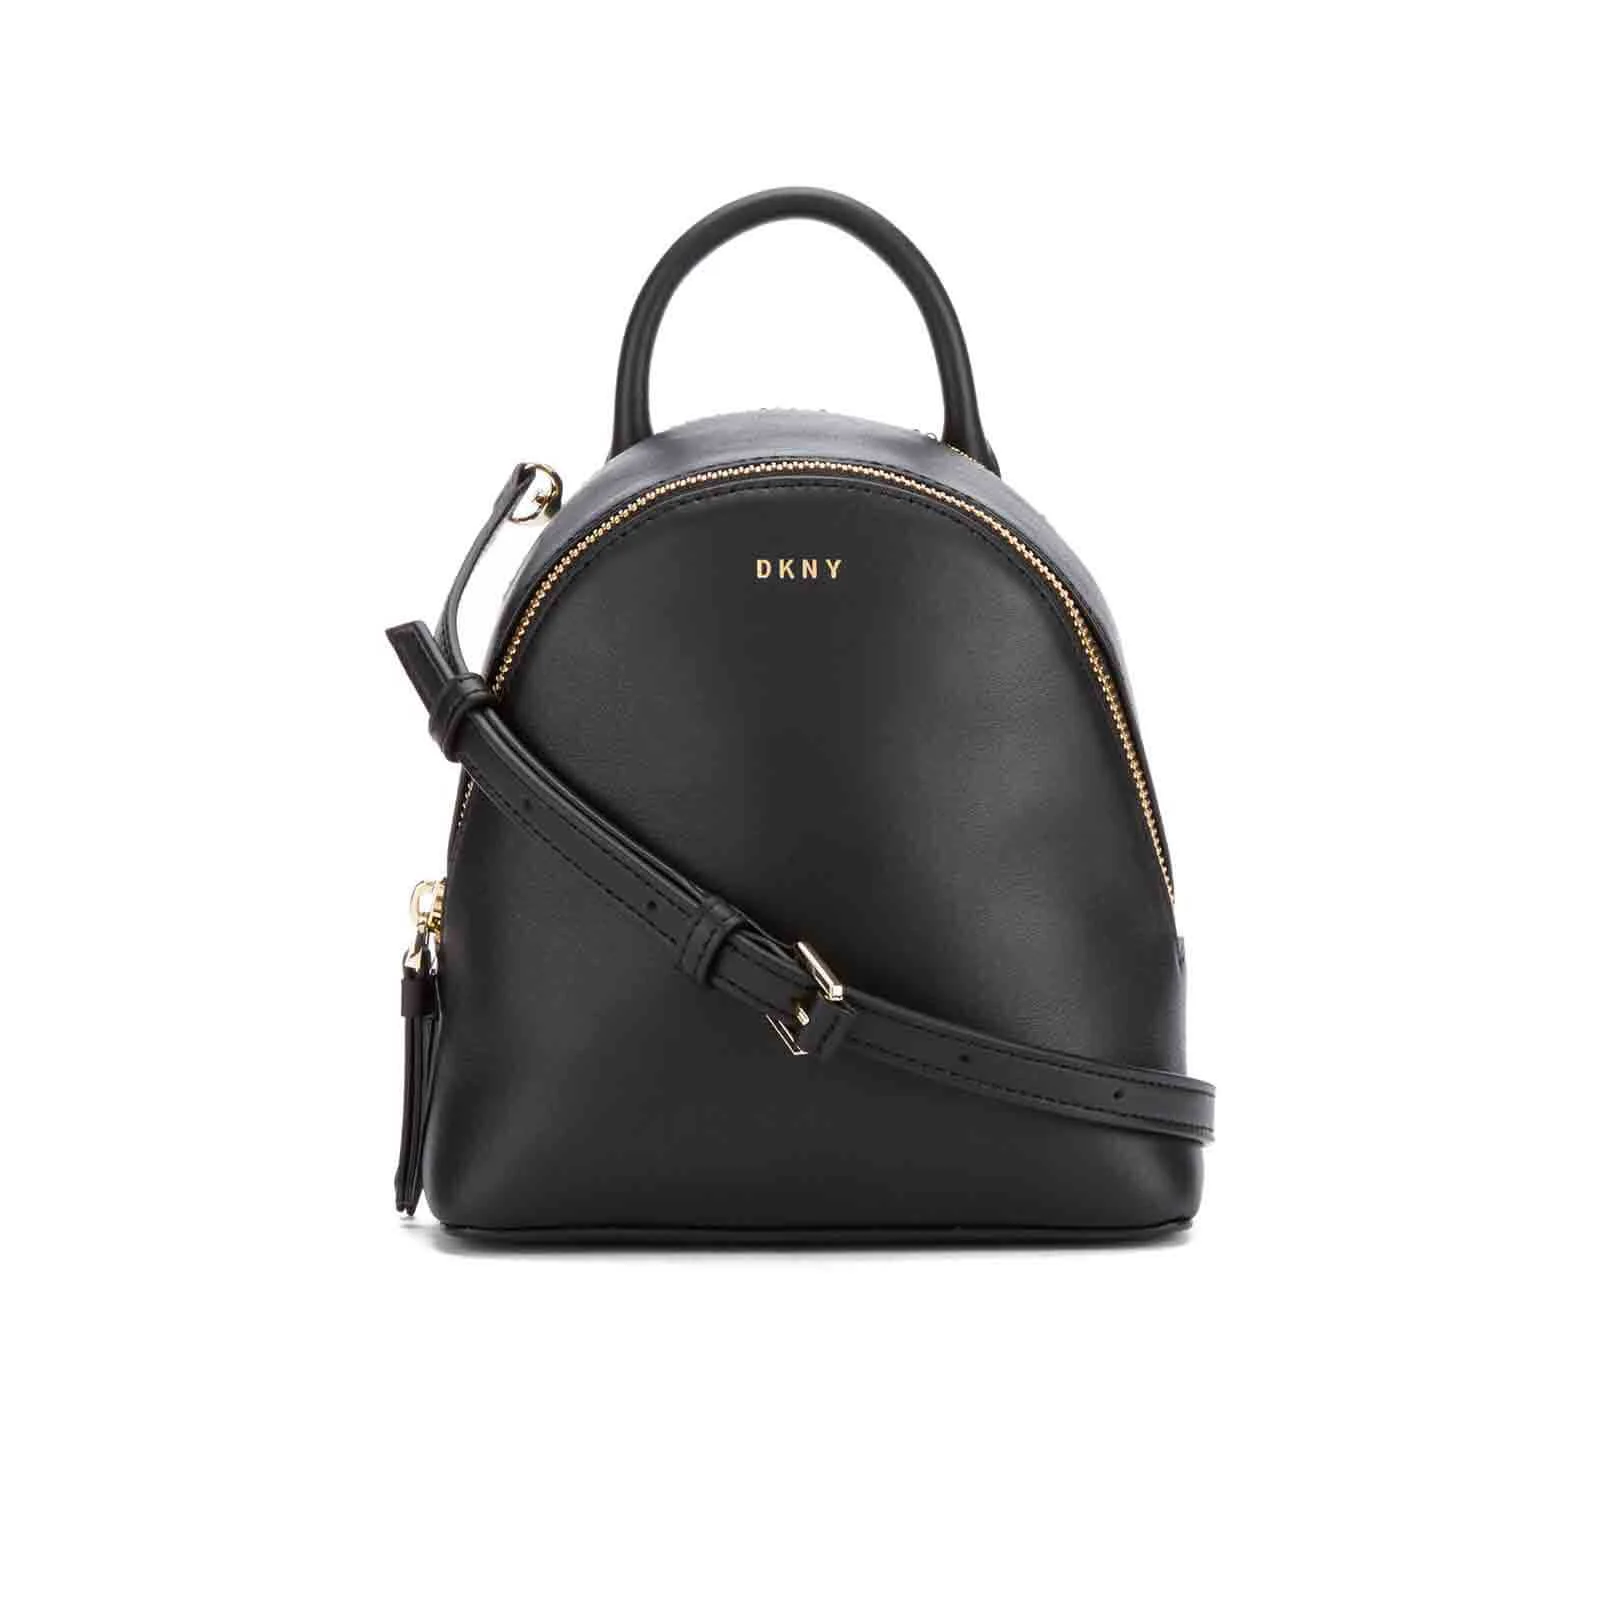 DKNY Women's Greenwich Mini Backpack - Black Image 1